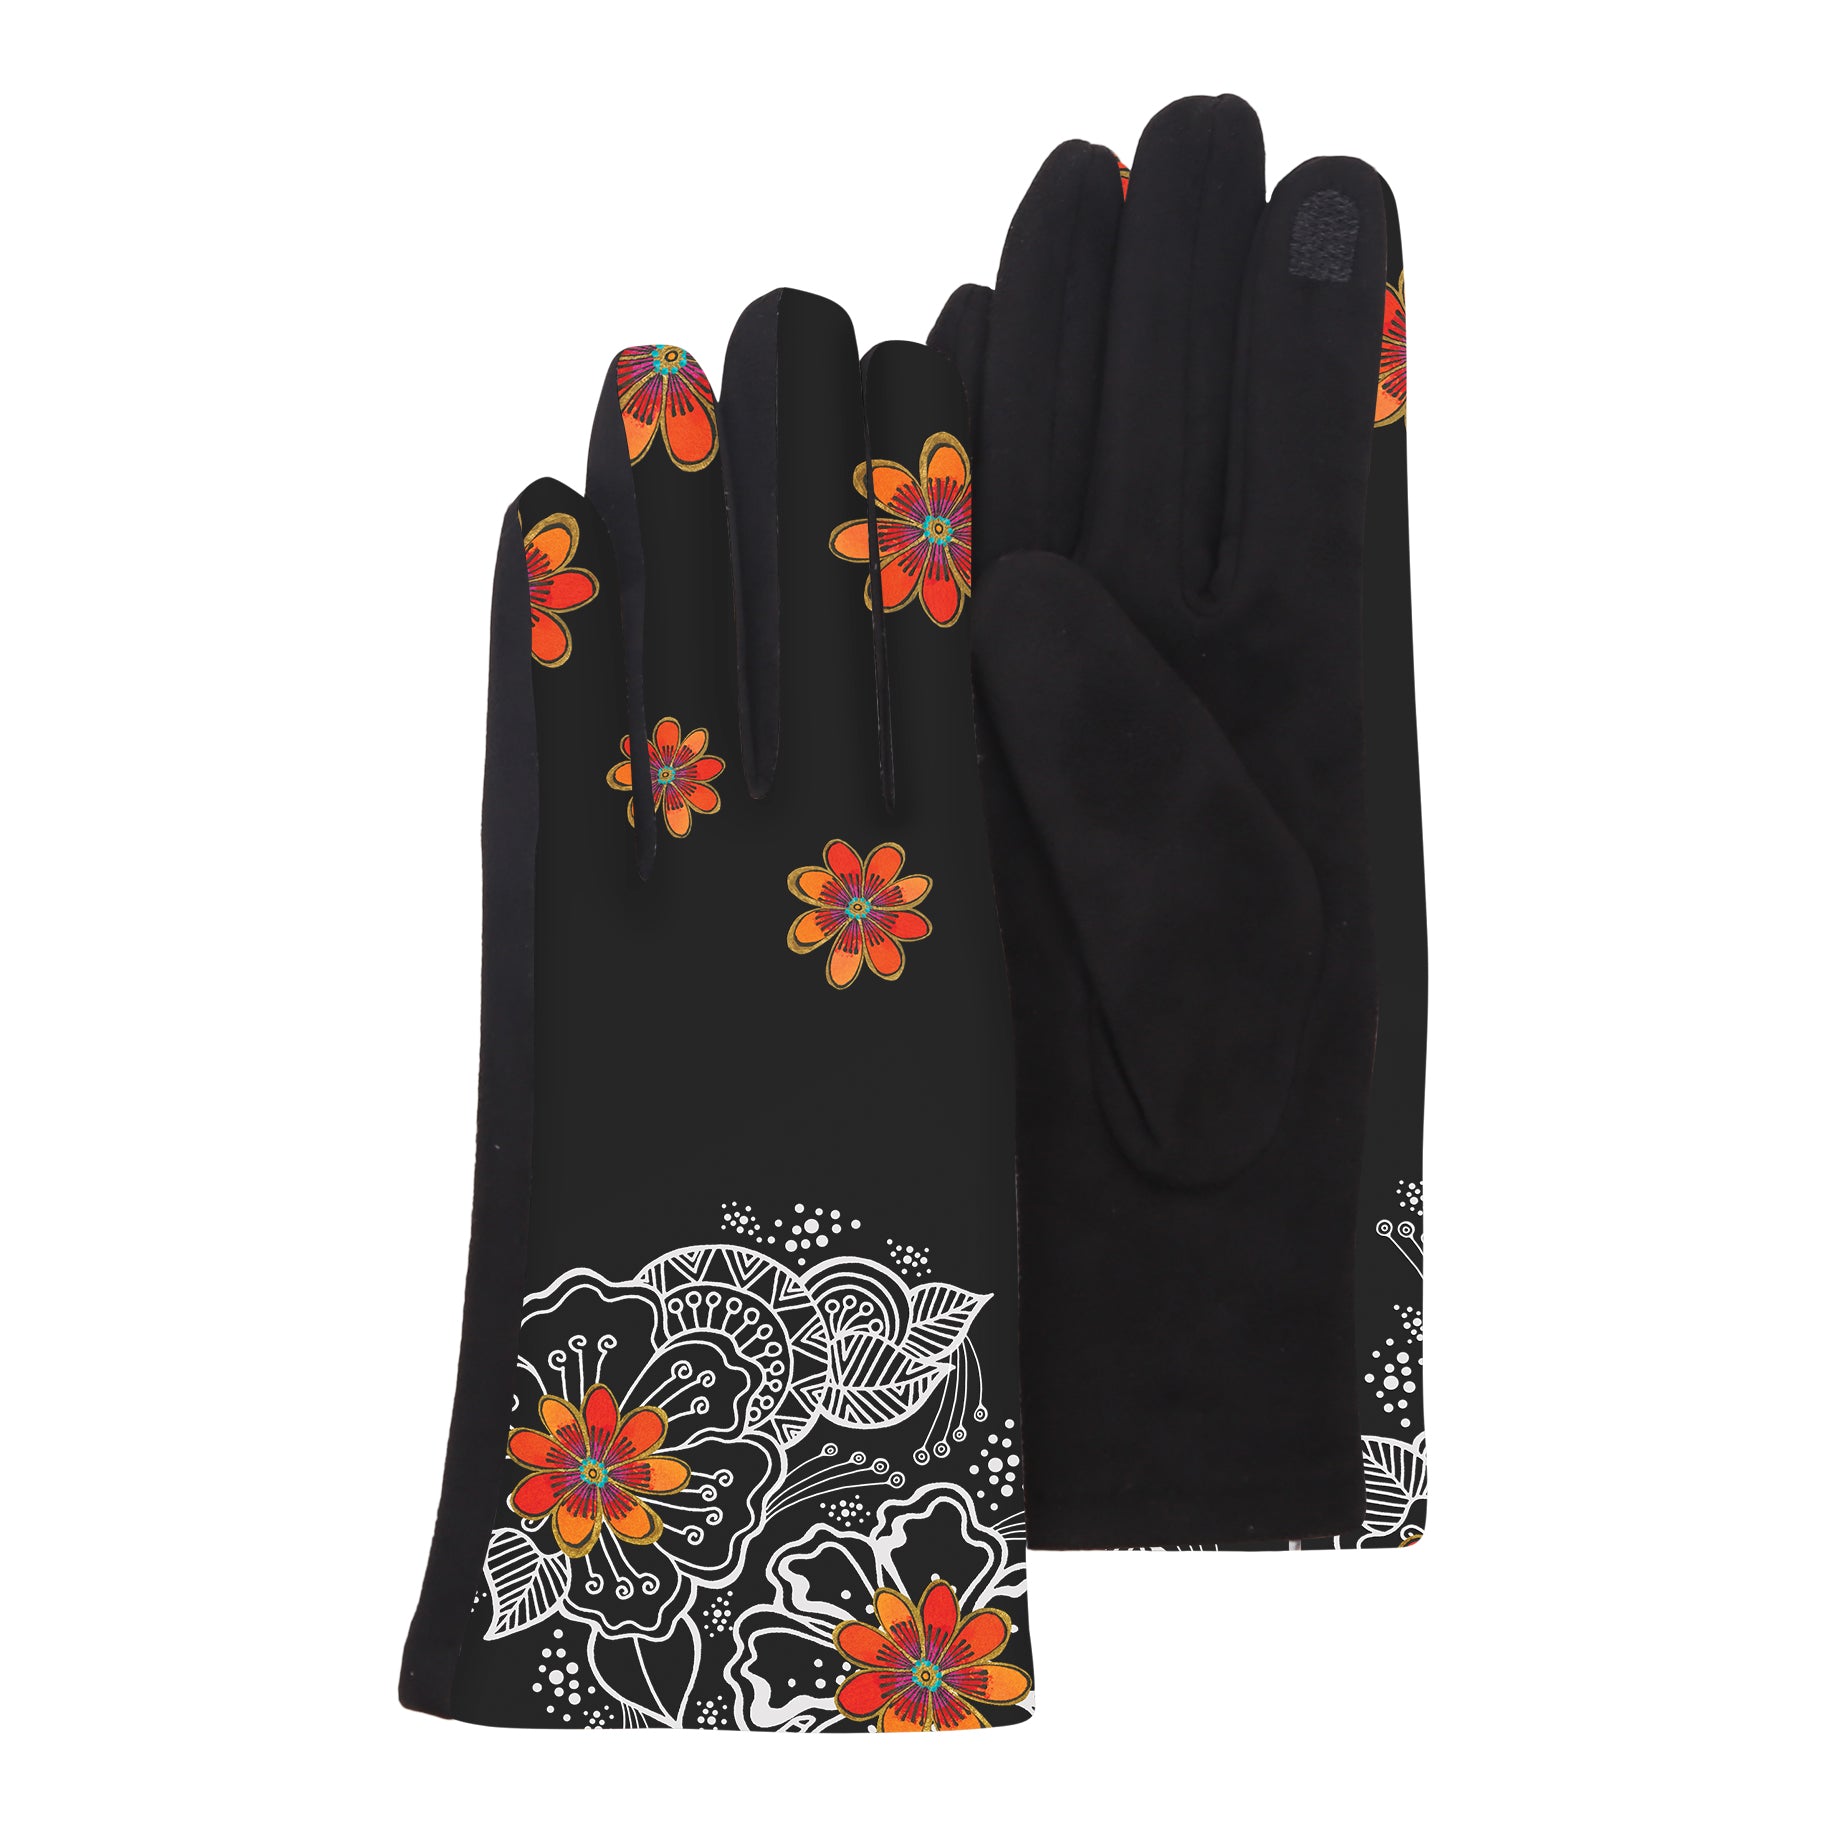 Laurel Burch "Orange Blossoms" Texting Gloves